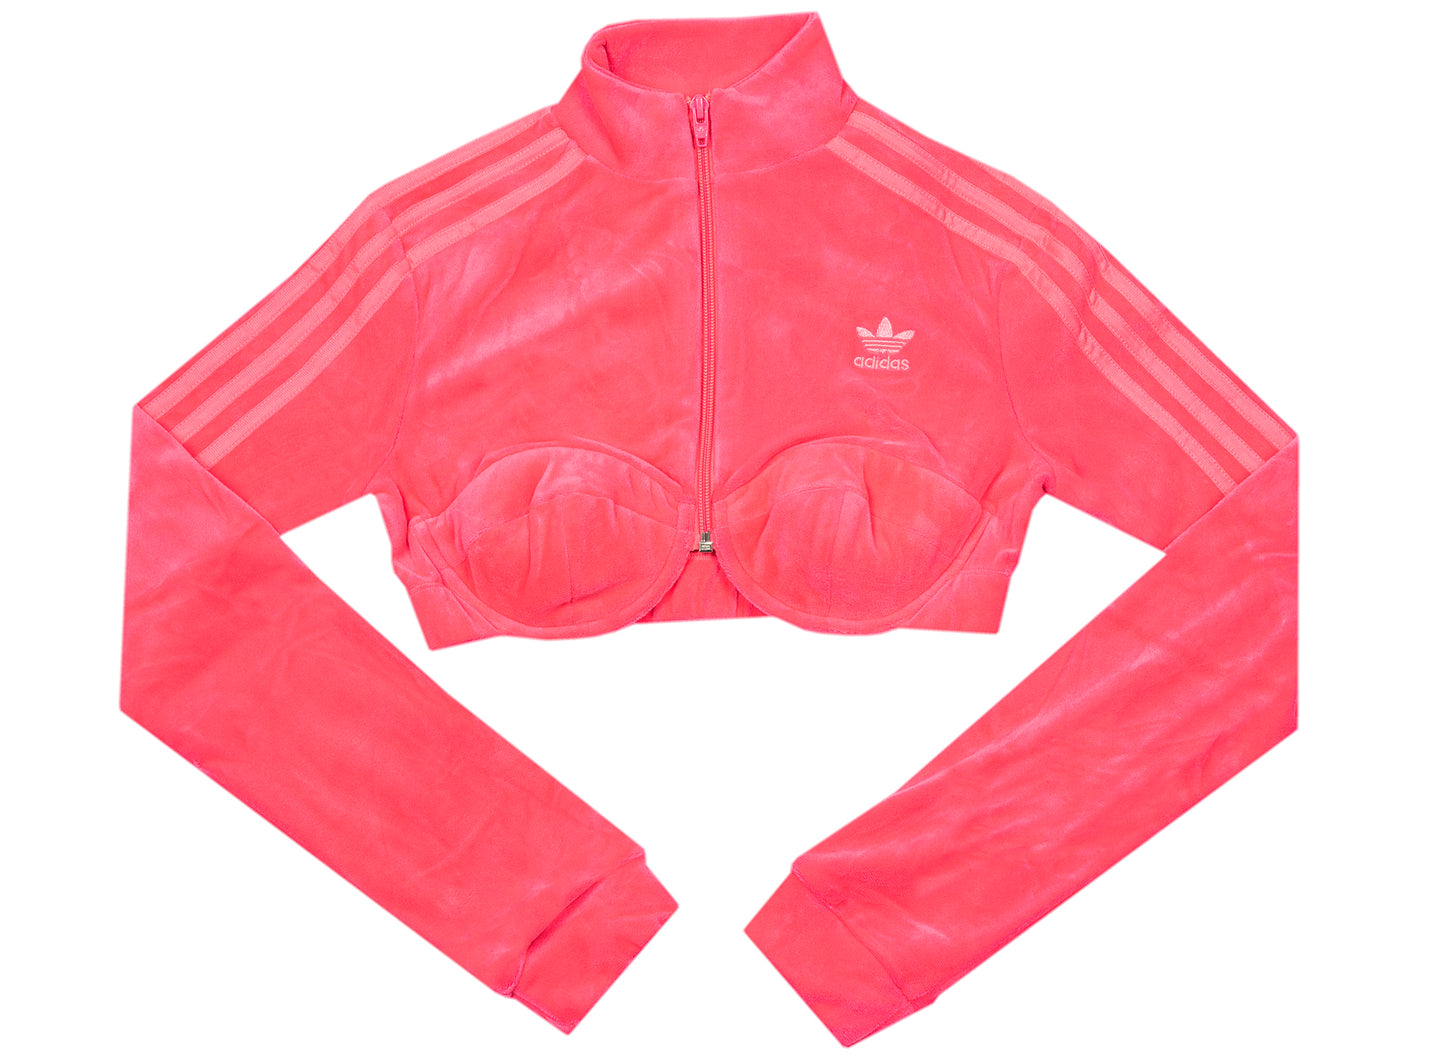 Women's Adidas Jeremy Scott Track Top in Soft Pink